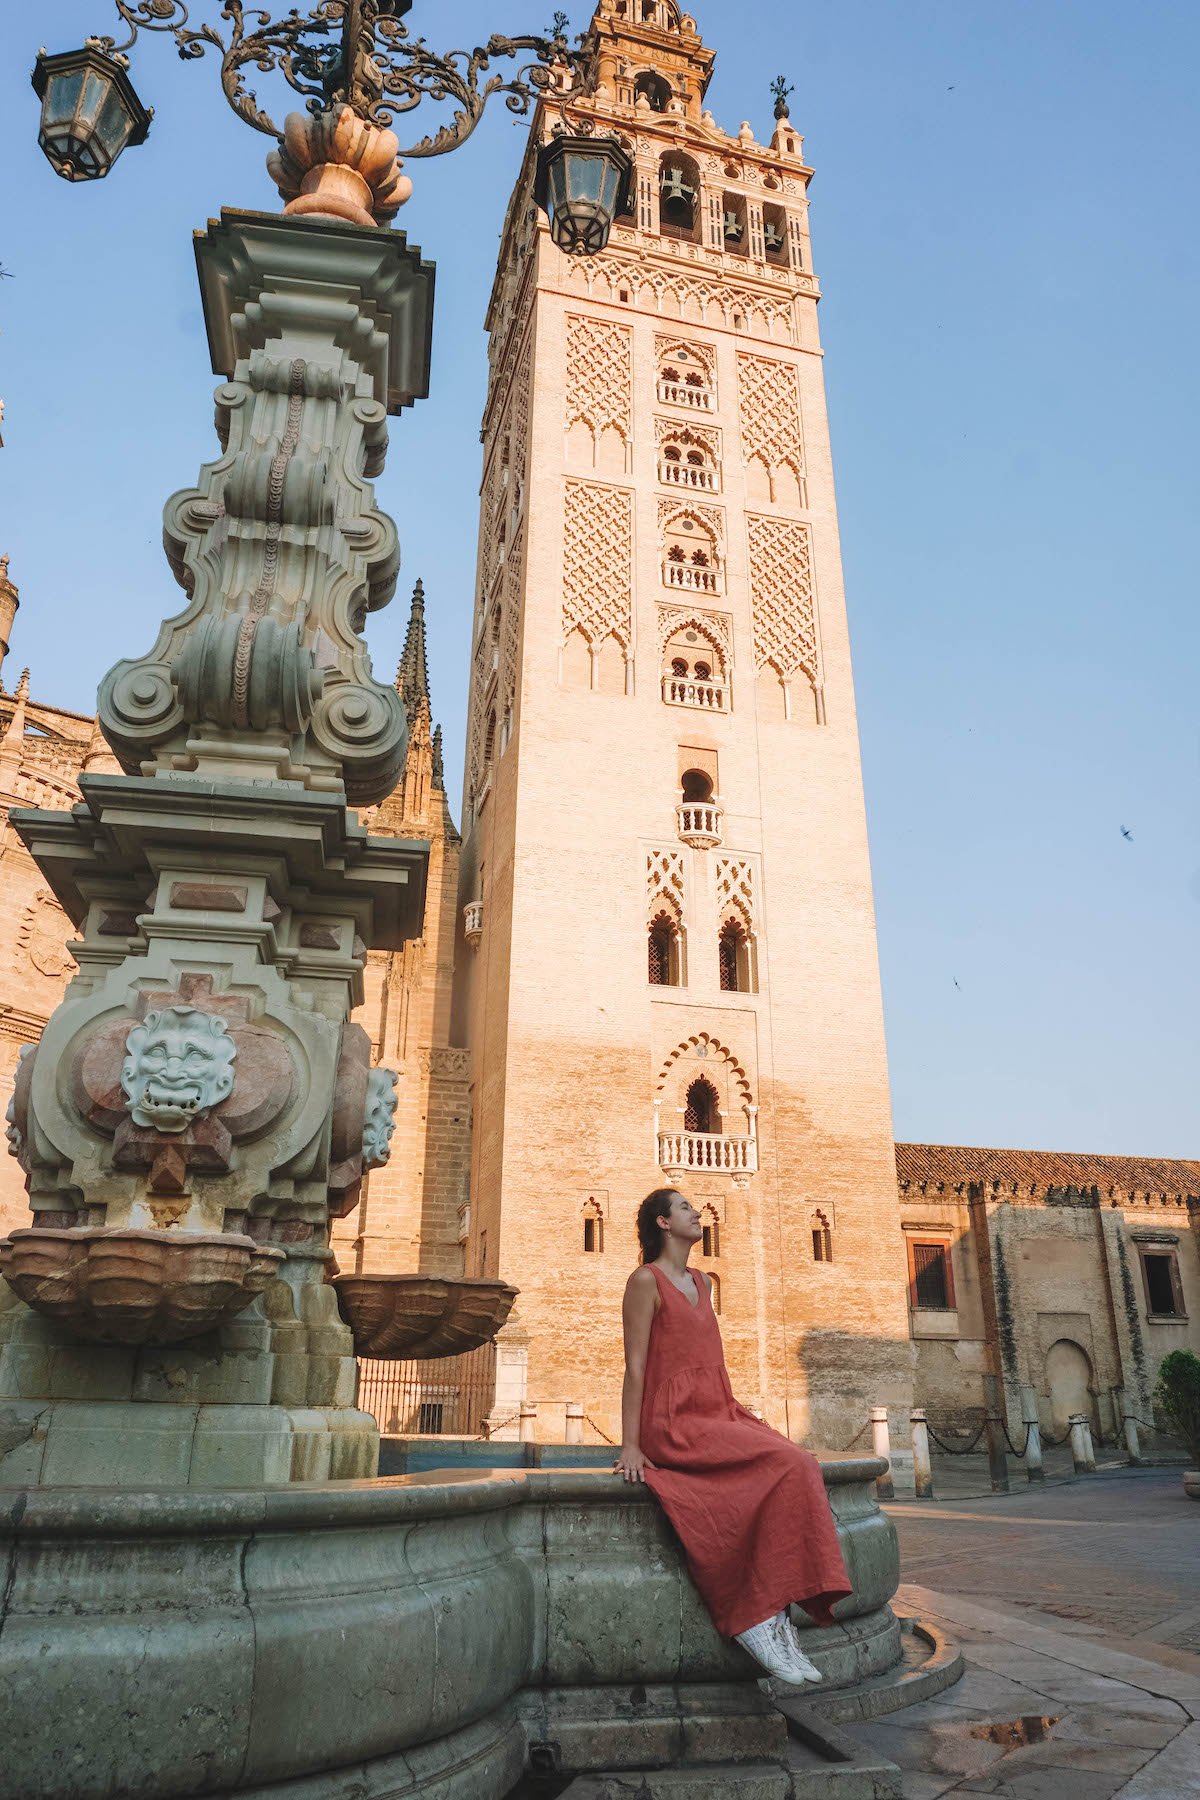 Woman sitting on fountain in front of Seville's La Giralda.